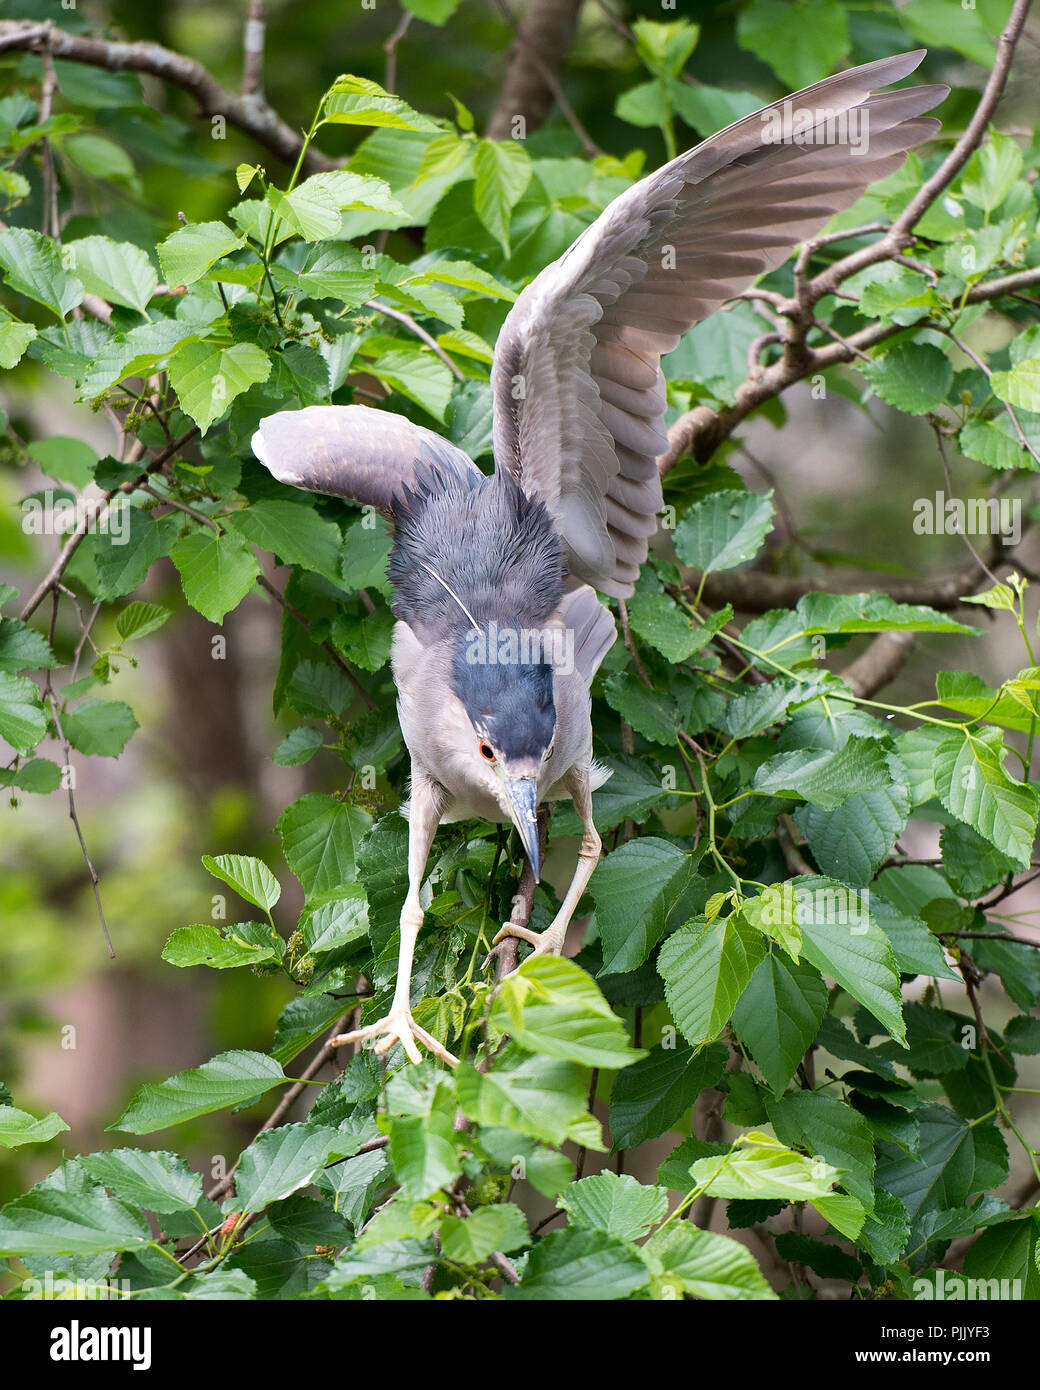 Black-Crowned Night-Heron Vogel mit Flügel Verbreitung in der Umwelt. Stockfoto